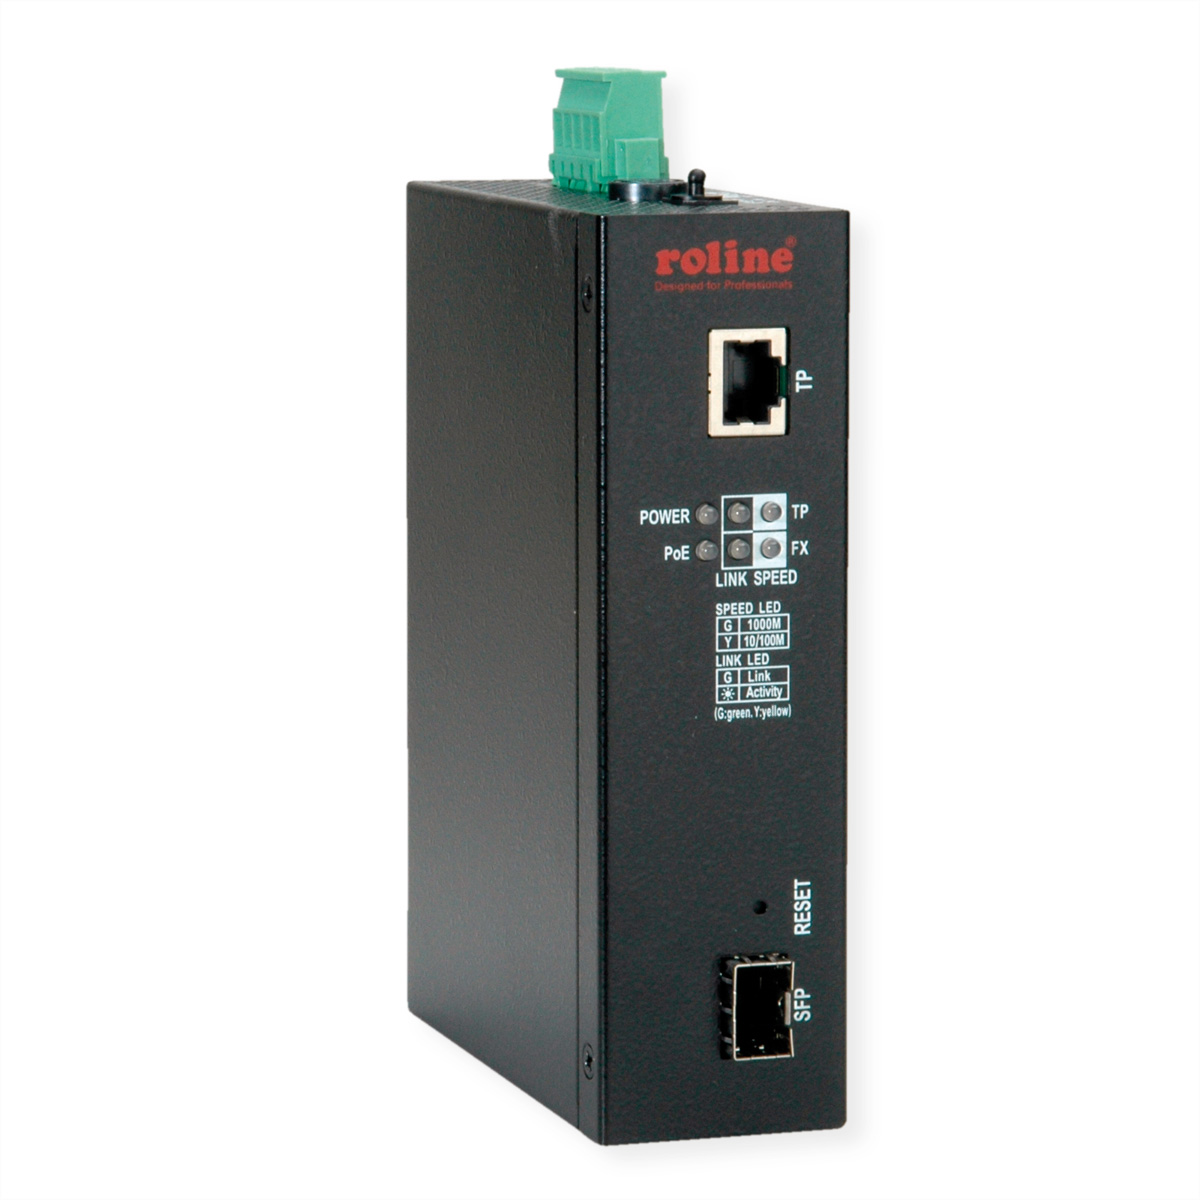 ROLINE Industrie Konverter Gigabit Ethernet - Dual Speed 100/1000 Fiber, mit PoE